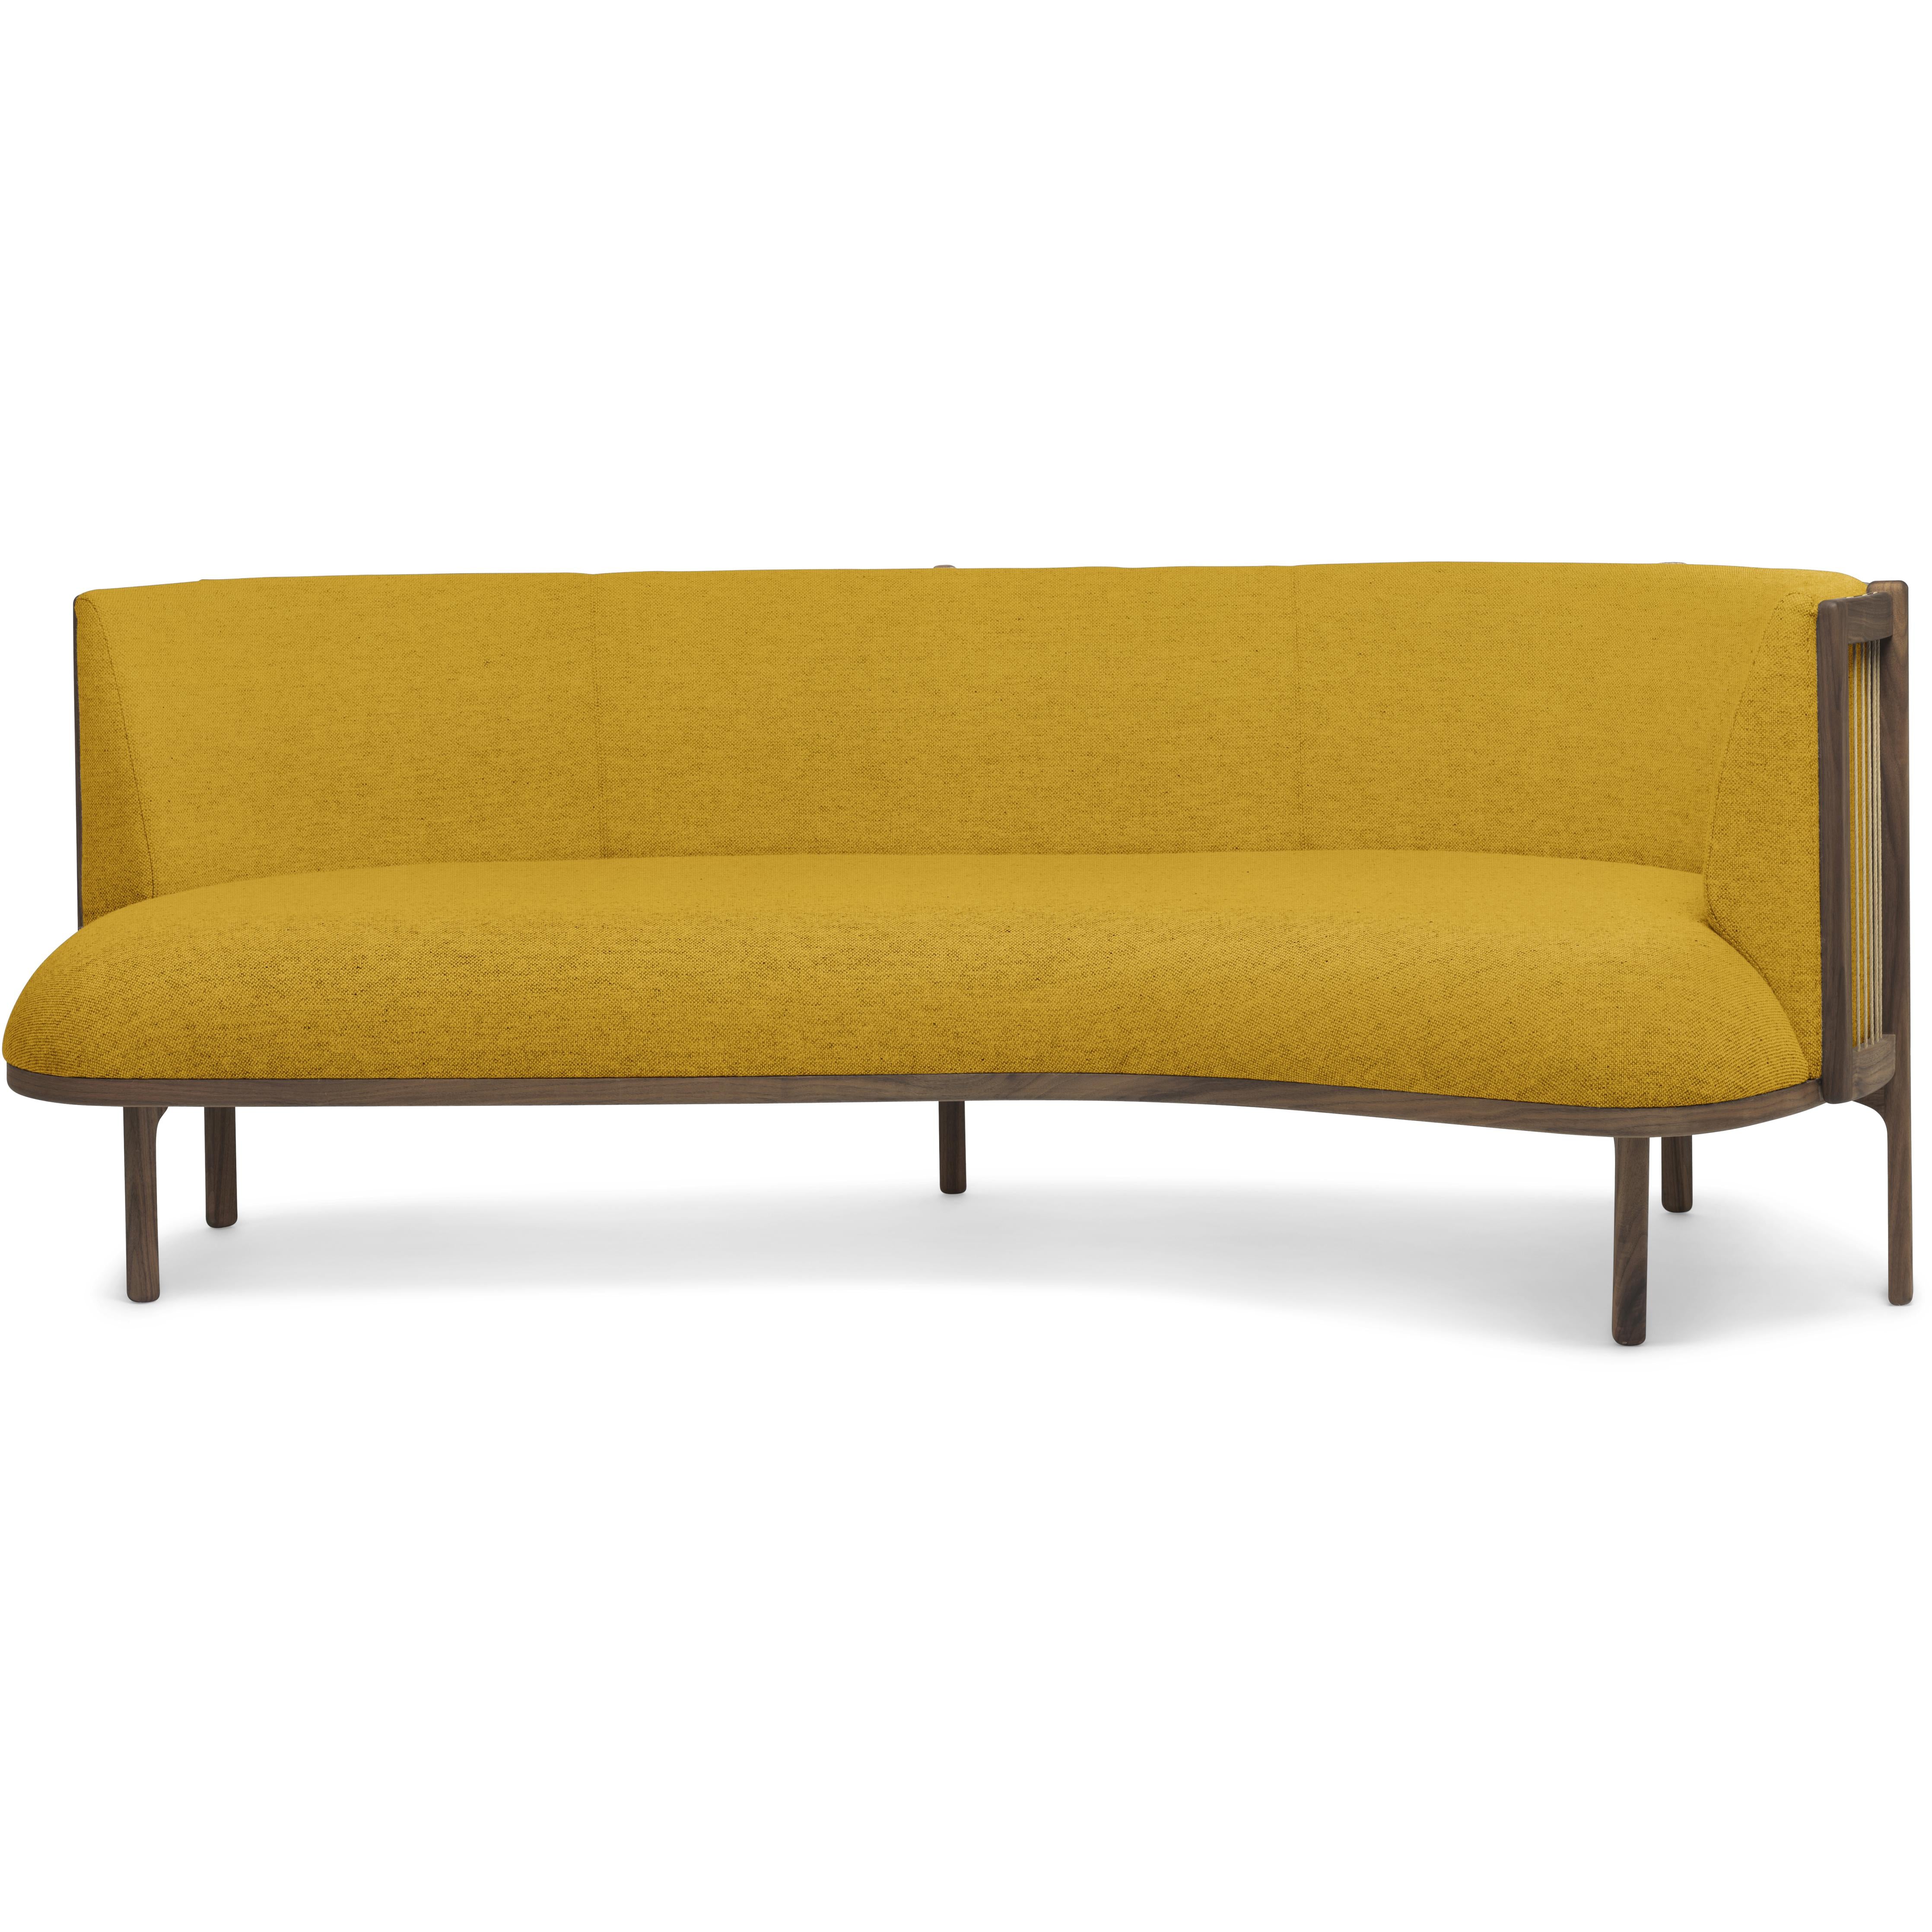 Carl Hansen Rf1903 R Sideways Sofa 3 Seater Right Walnut Oil/Hallingdal 457 Fabic, Yellow/Natural Brown